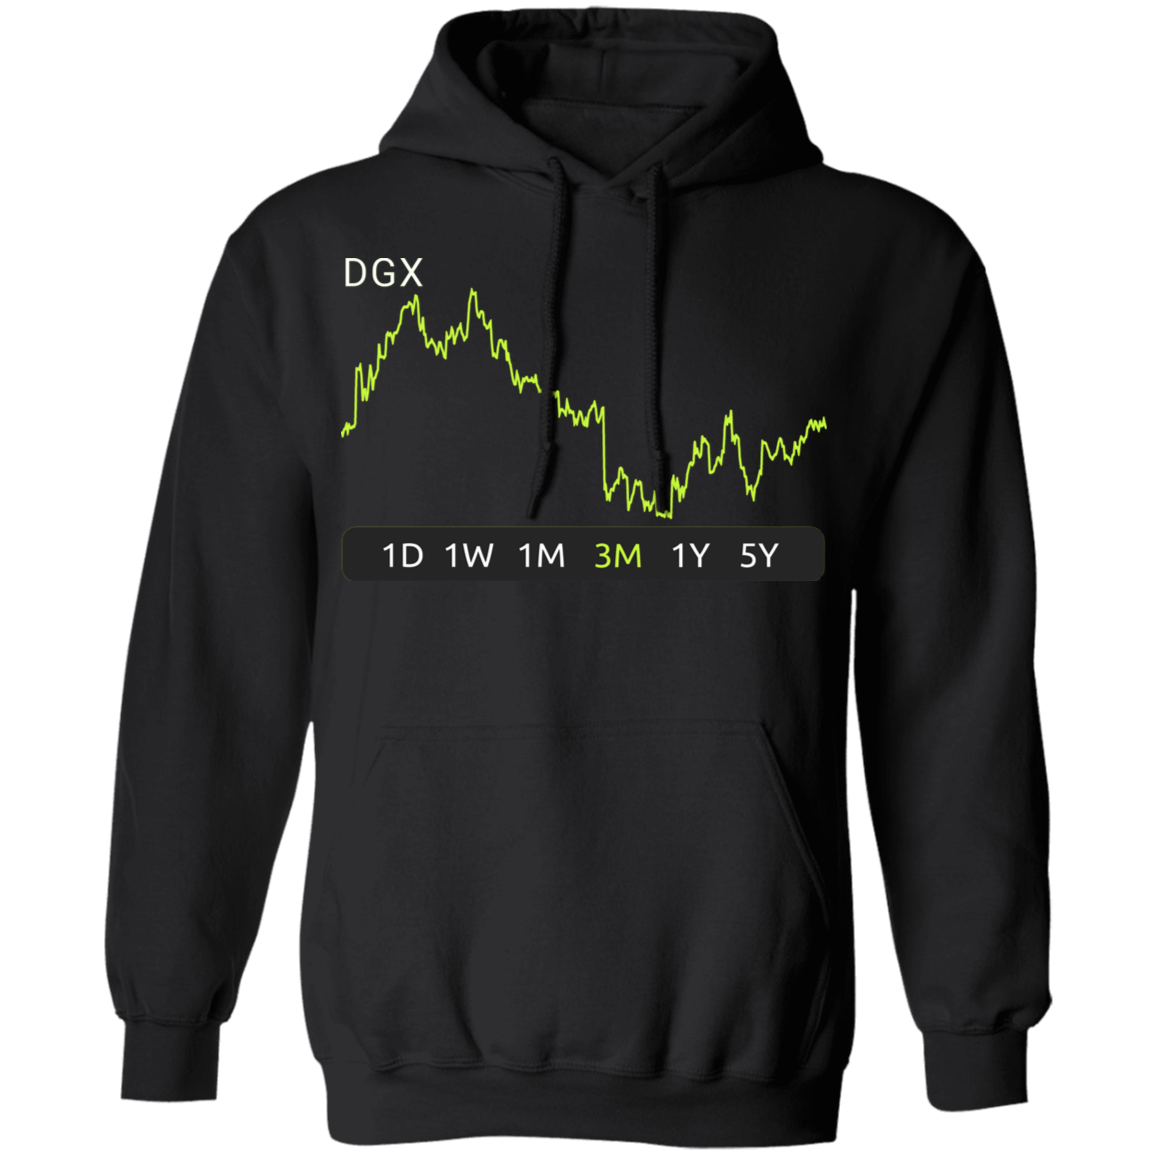 DGX Stock 3m Pullover Hoodie